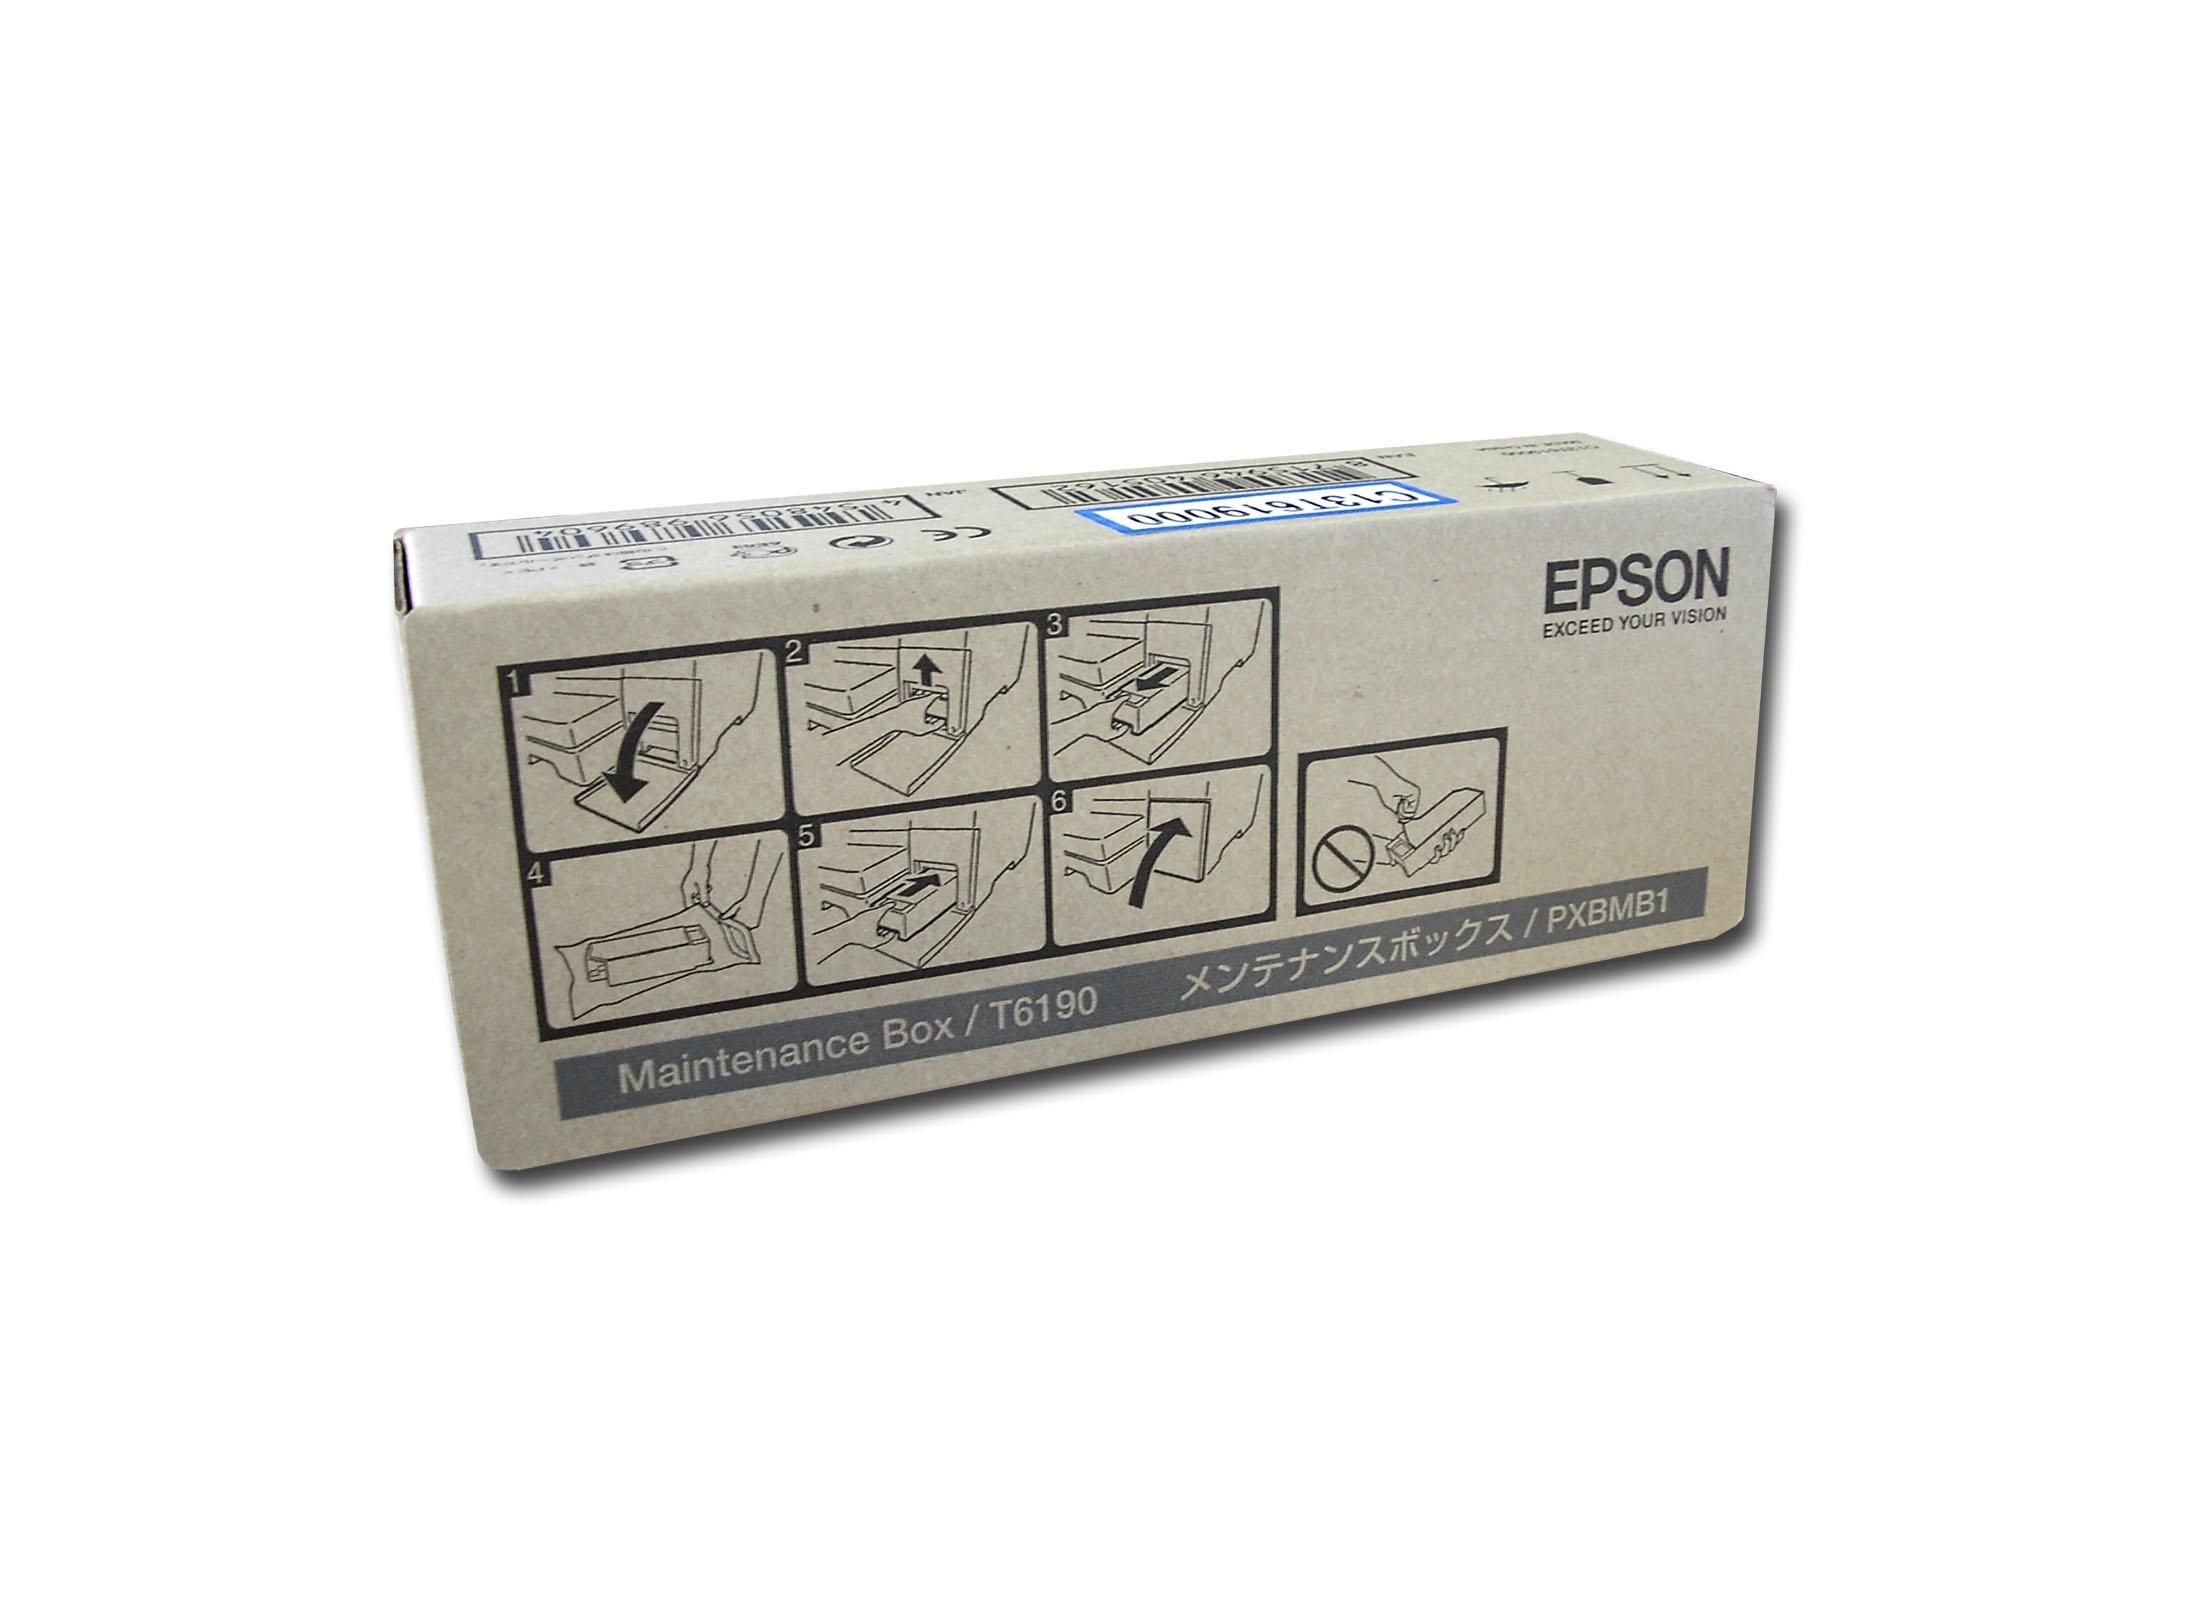 Epson MAINTANANCE BOX Per